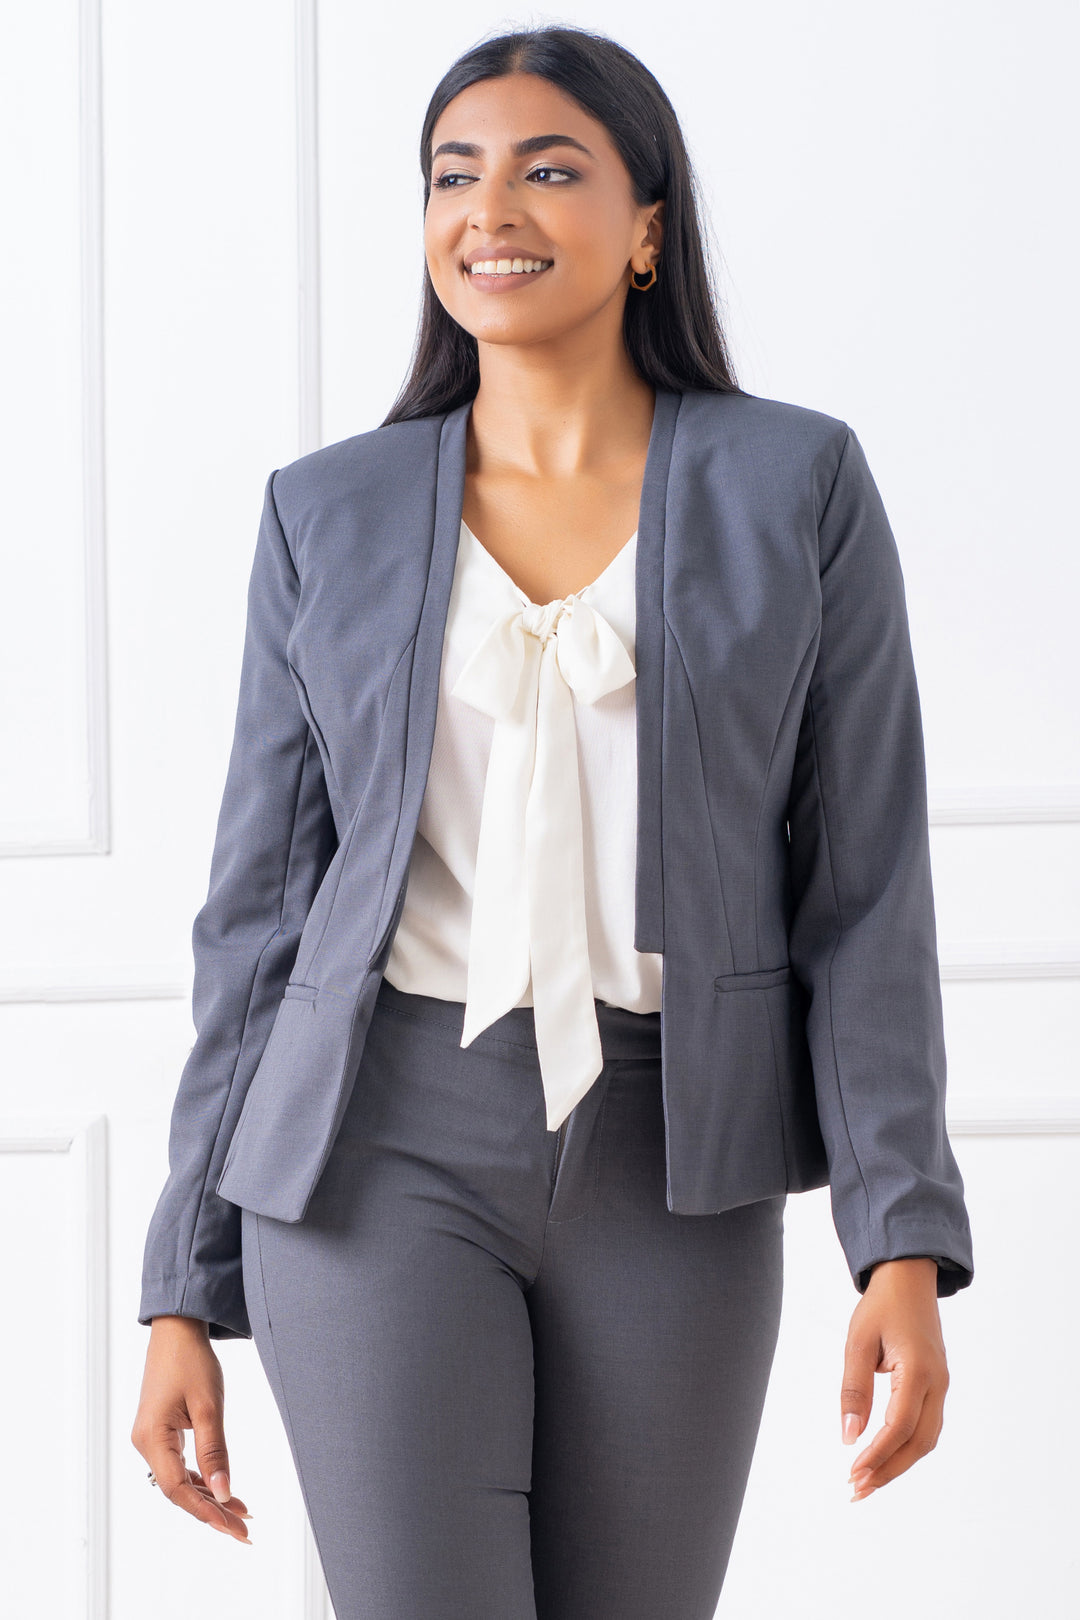 V Neck Front Tie Rayon Blouse - Regular Fit, Top, New Arrivals, Office Tops, Regular Fit, Short Sleeves, Smart Casual, Smart Casual Top, V Neck, Work Top, workwear - MONDY, Sri Lankan women's